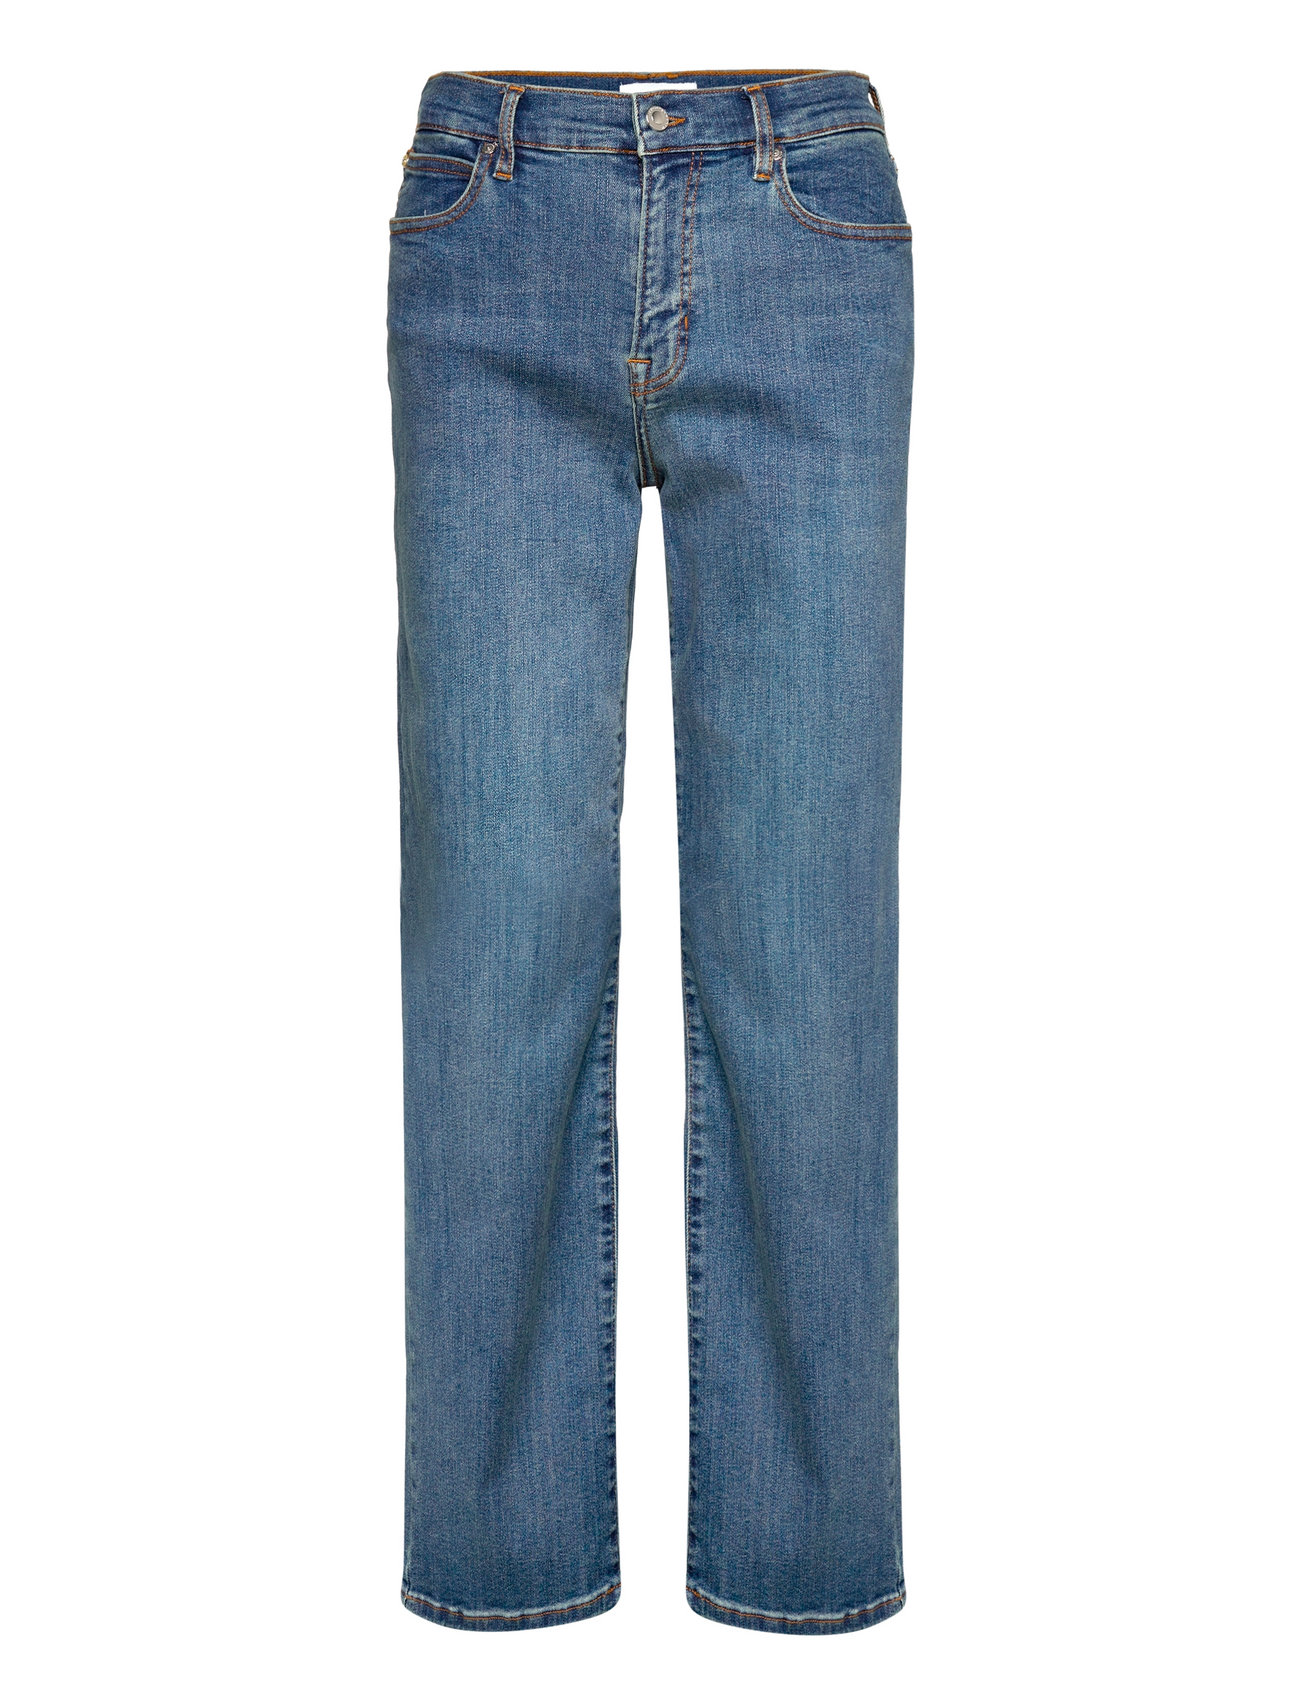 IVY Copenhagen Ivy-mia Straight Jeans Wash Valetta - Straight jeans ...